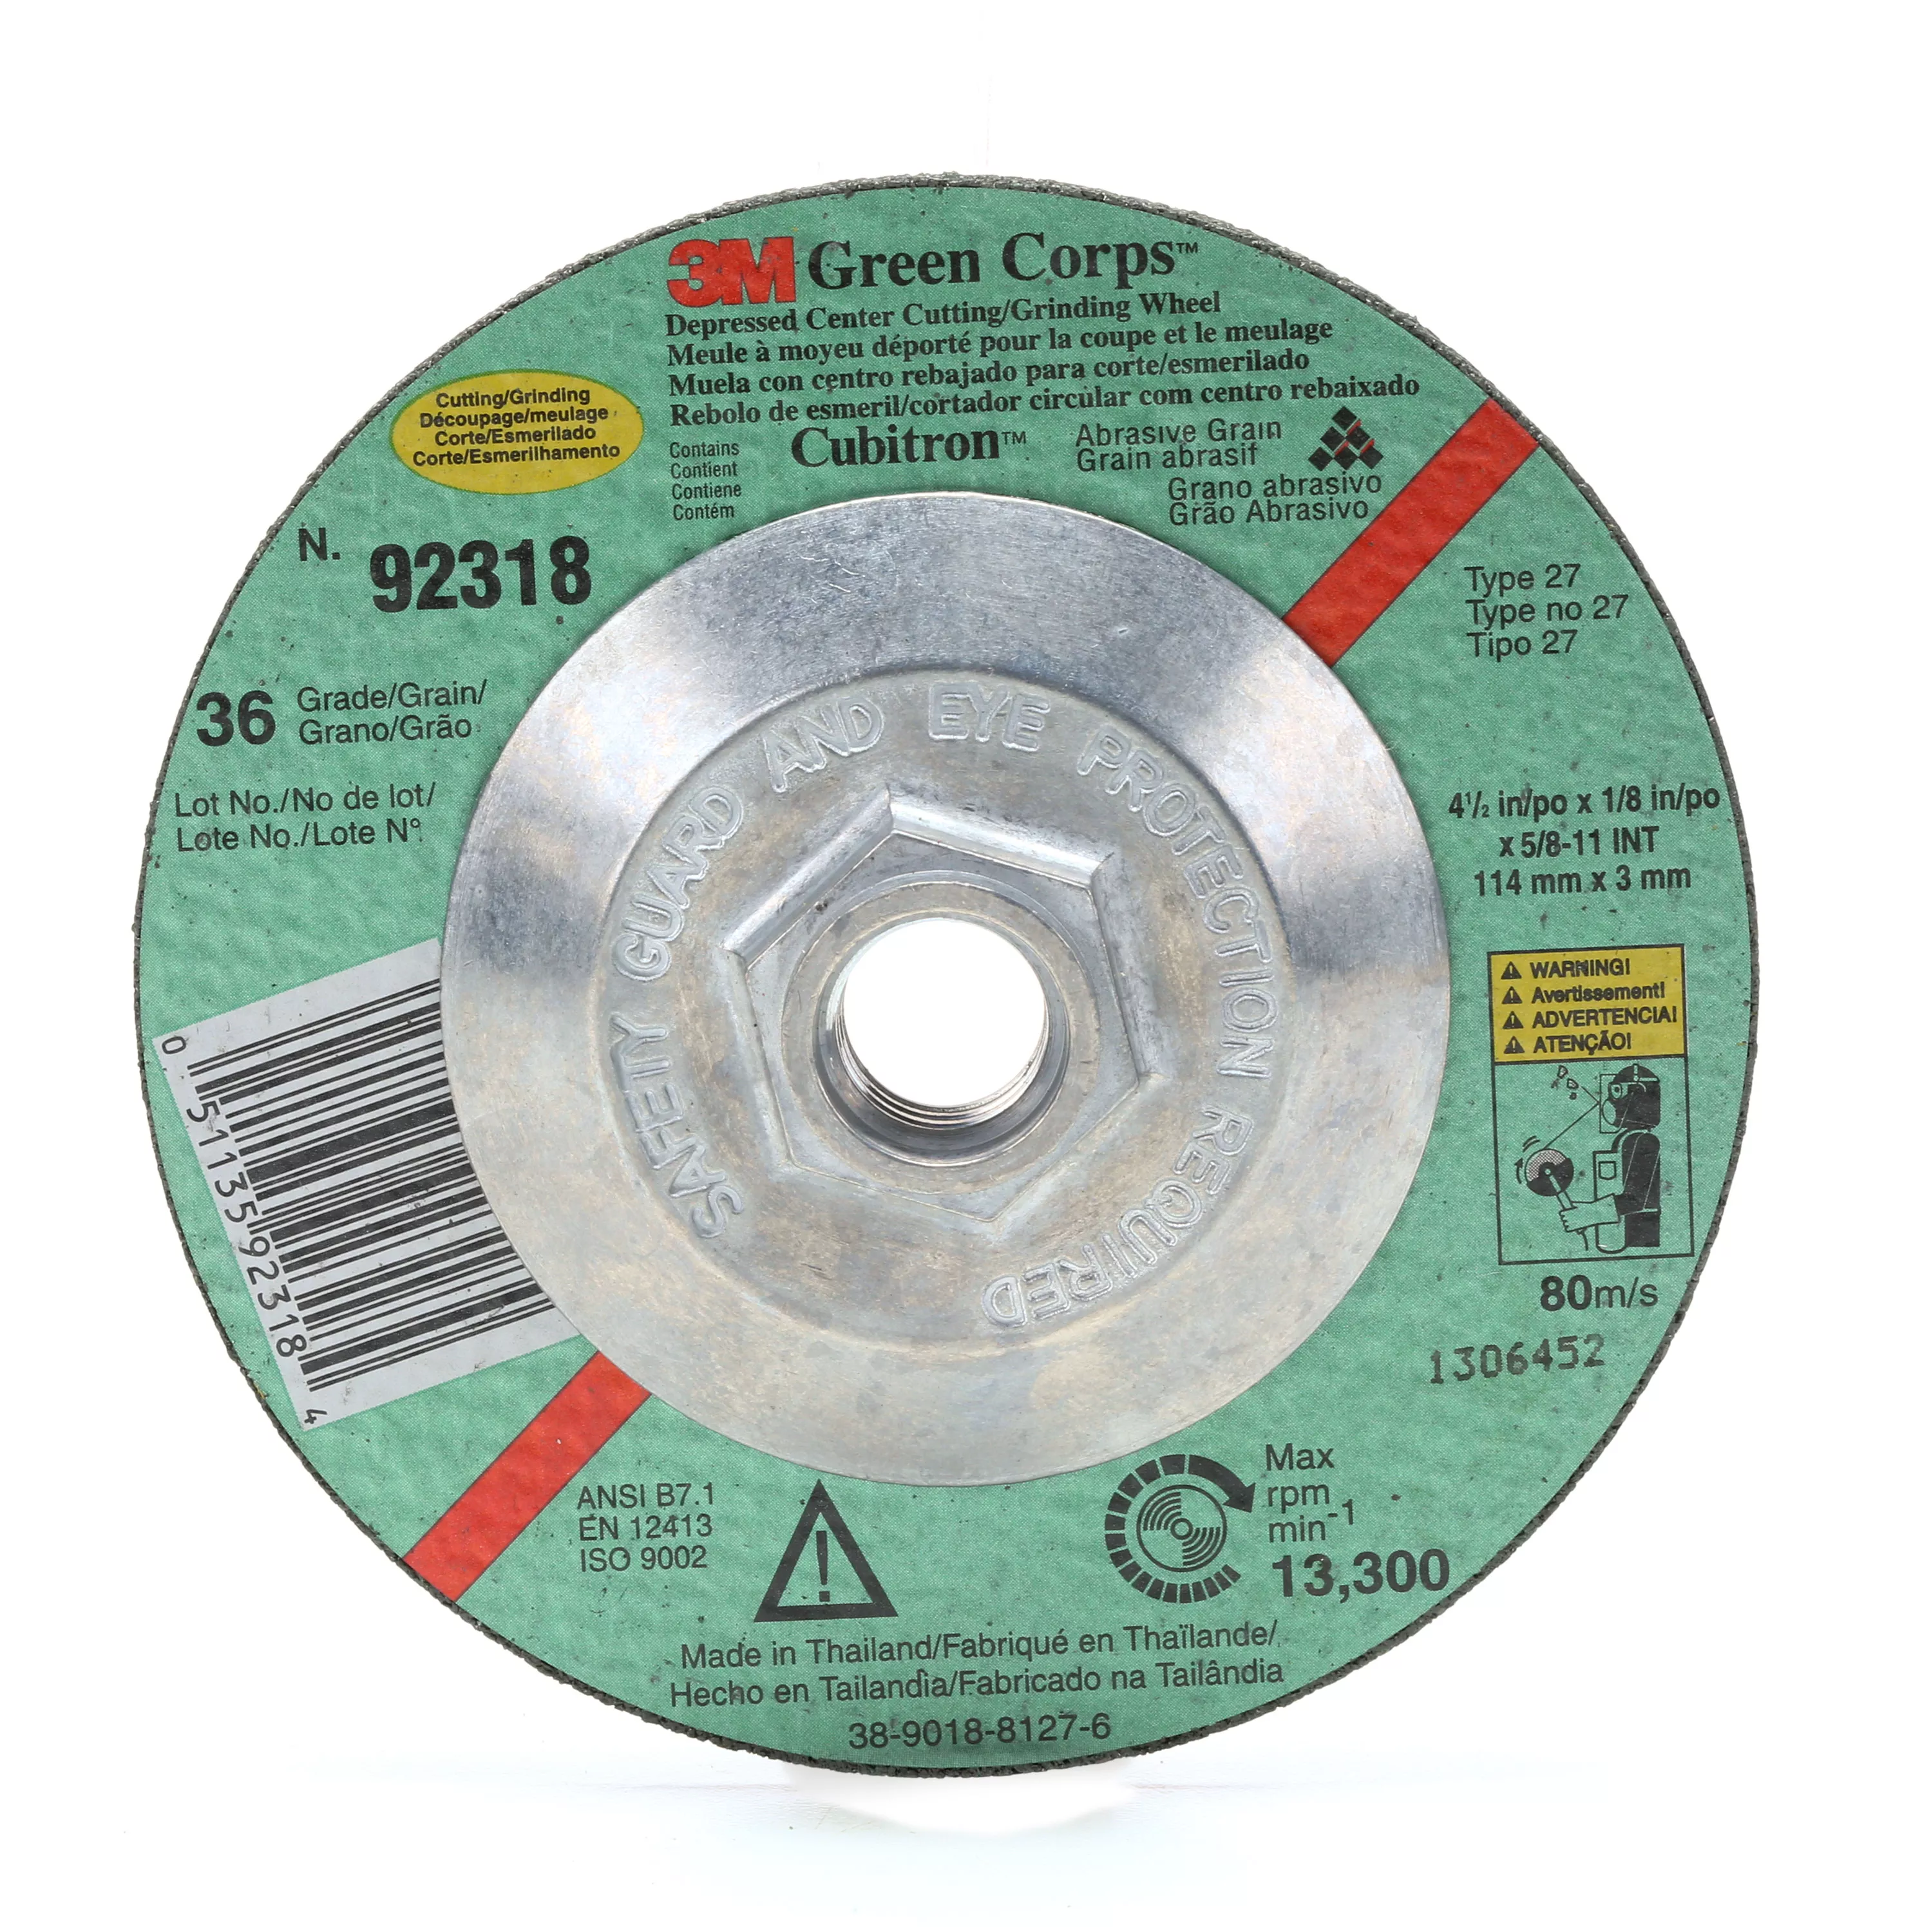 SKU 7000118489 | 3M™ Green Corps™ Cutting/Grinding Wheel